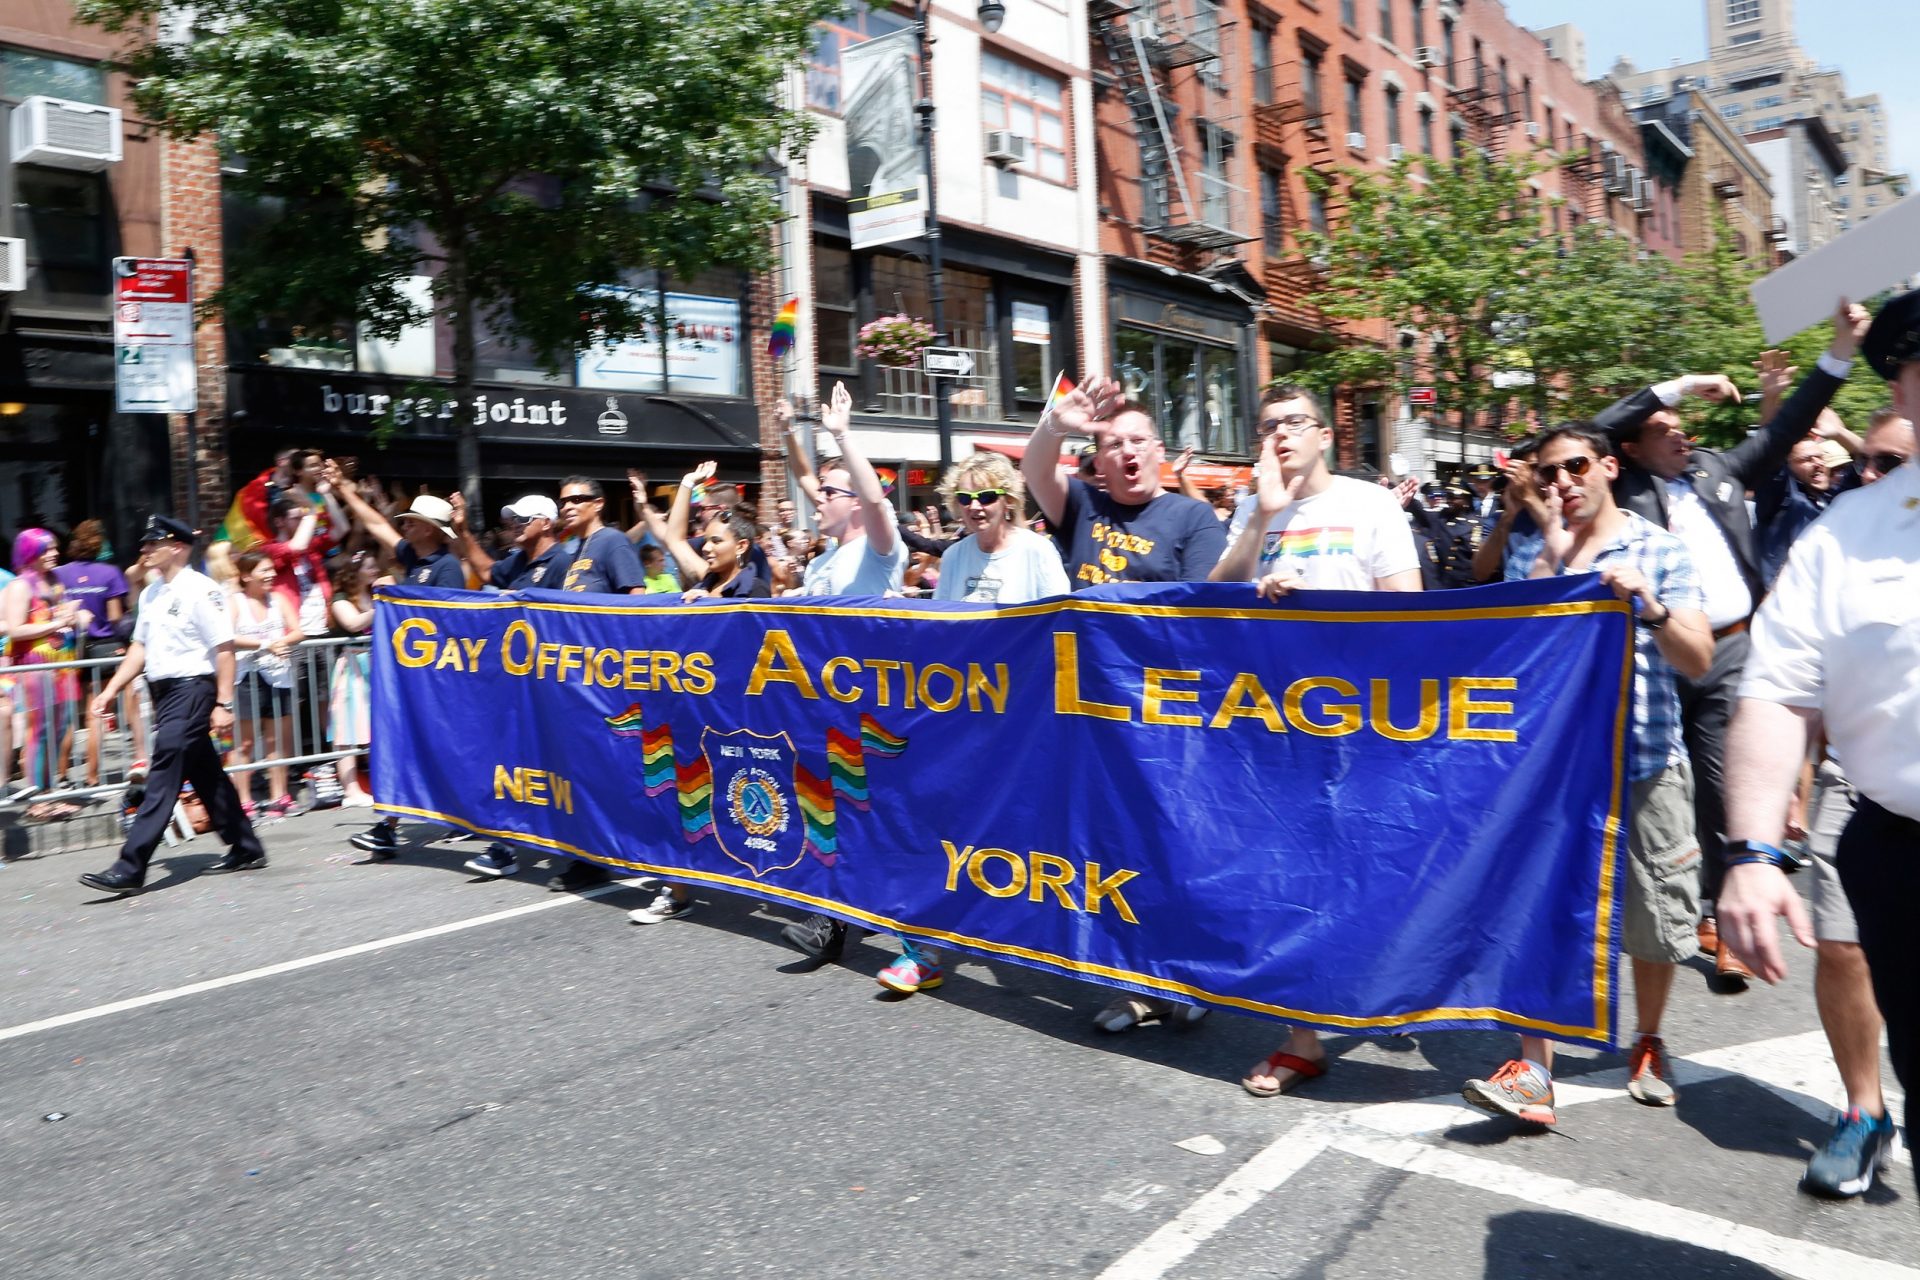 Joyful Police Group Blasts NYC Pride Parade Organizers Banning Them: ‘Improper’